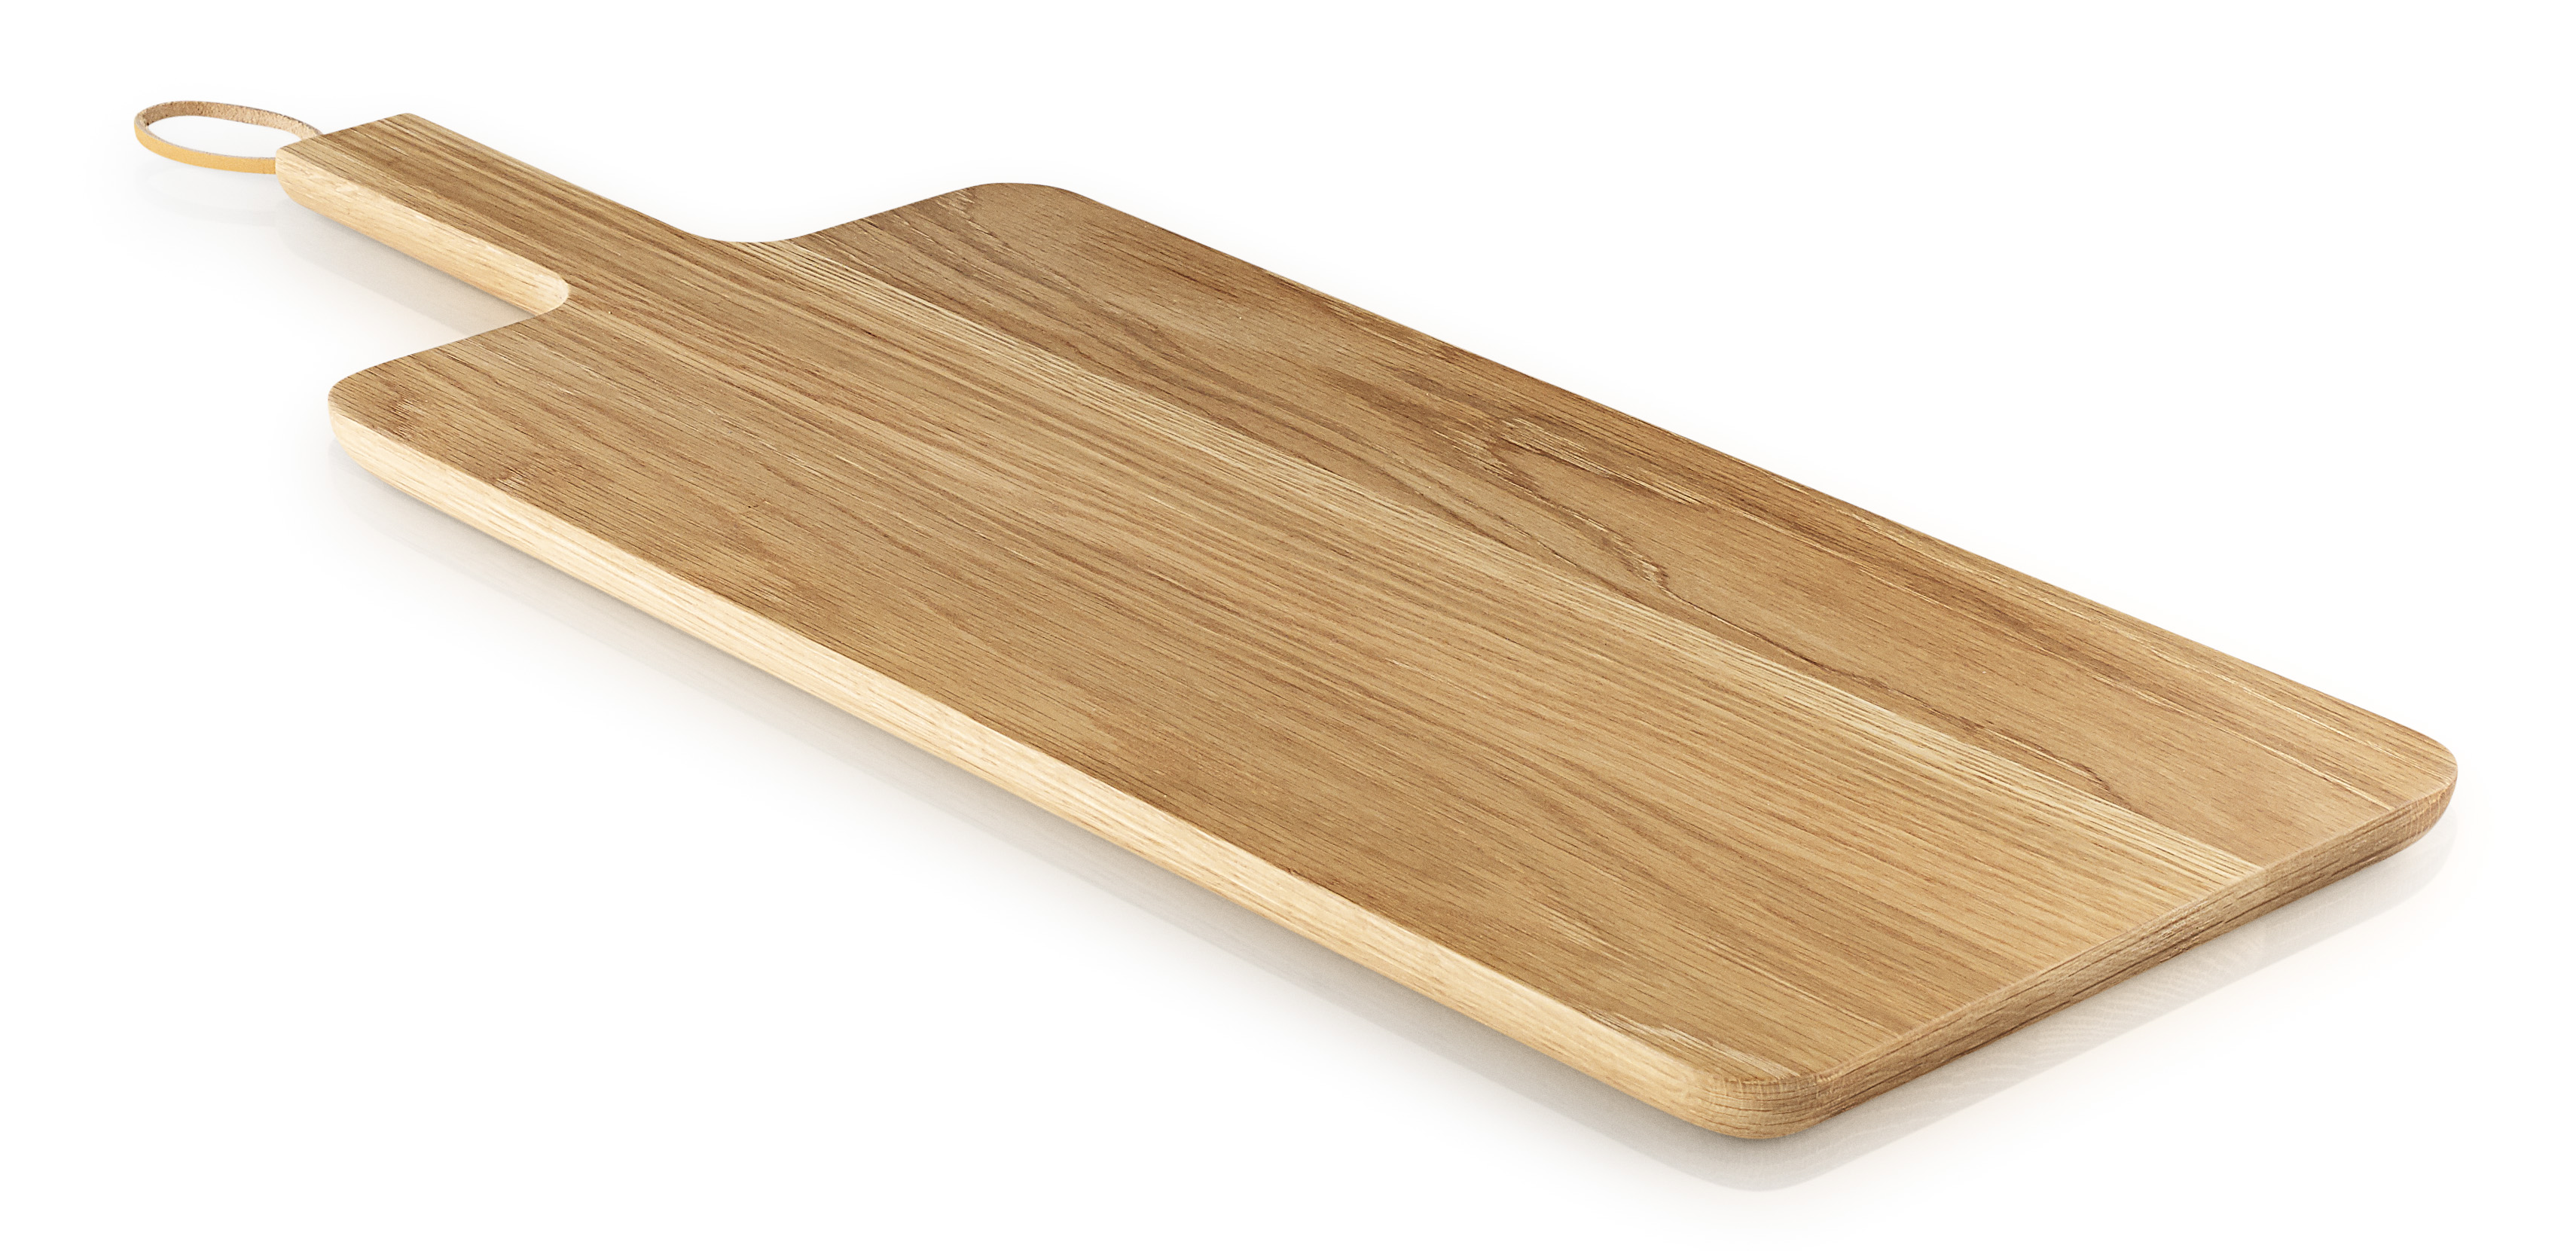 Eva Solo - Nordic Kitchen Cutting Board 22 x 44 cm - Medium (520410)